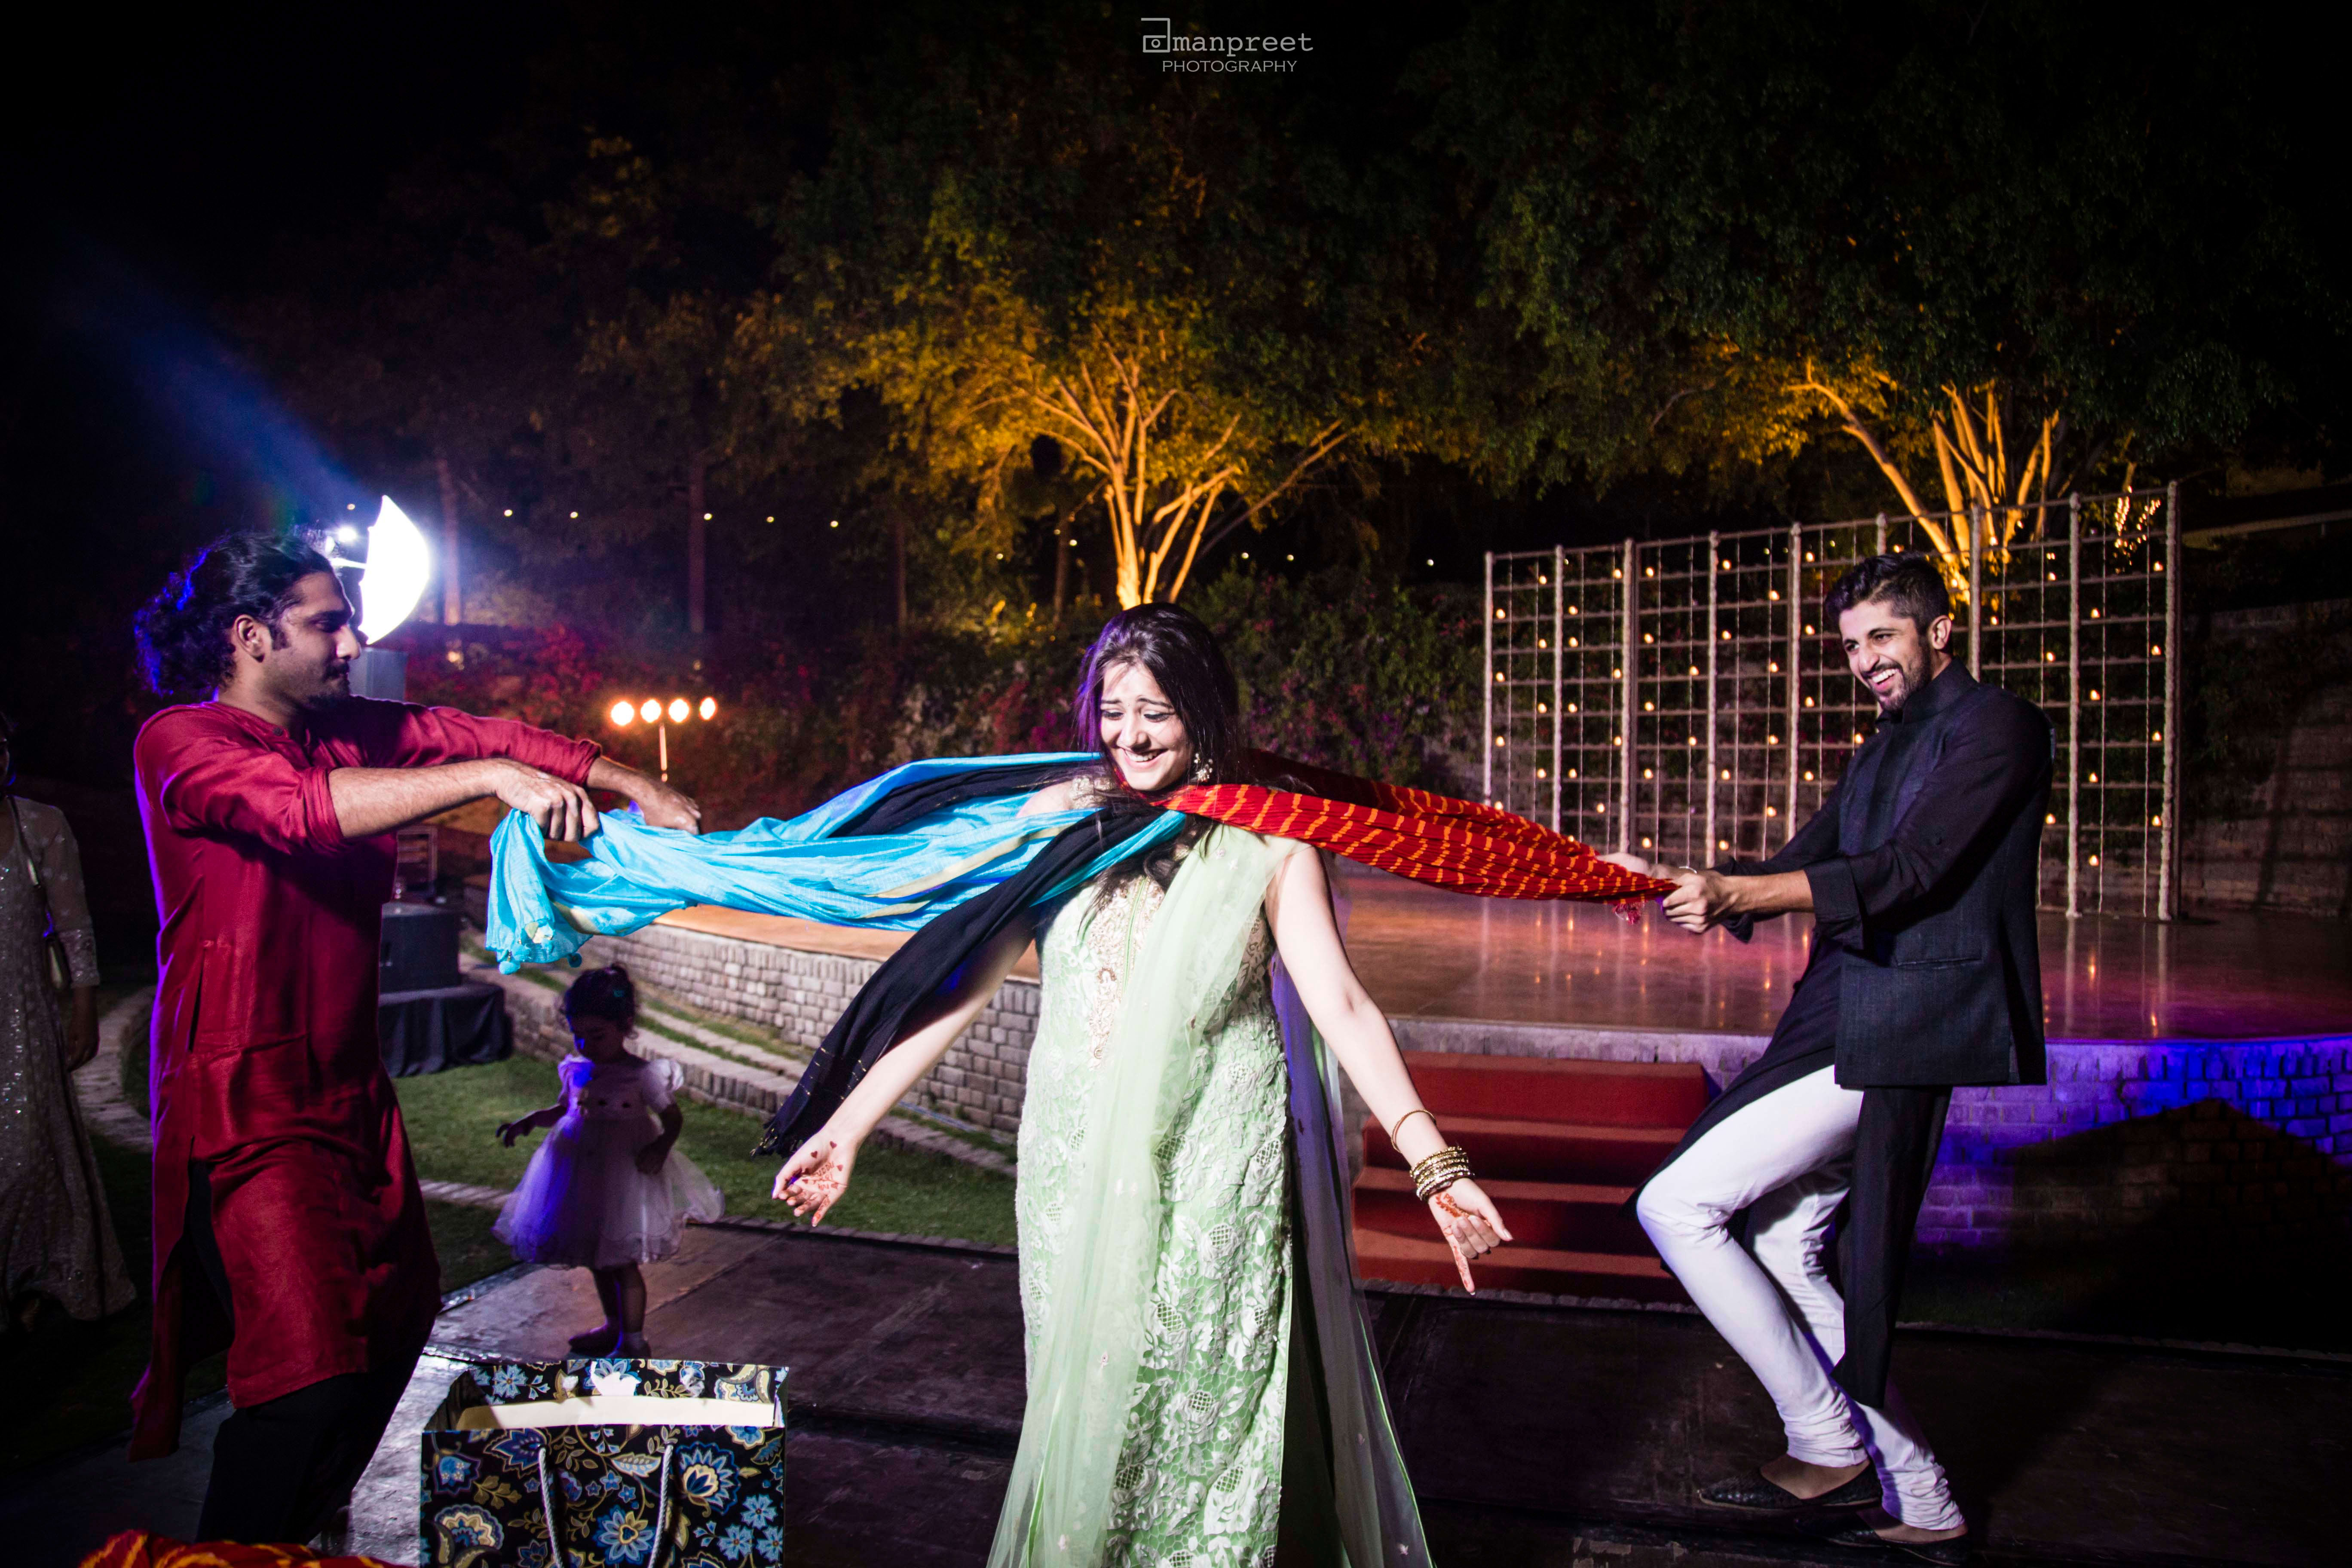 wedding madness overloaded!:geetanjali salon, raju mehandi wala, amanpreet photography, ole couture